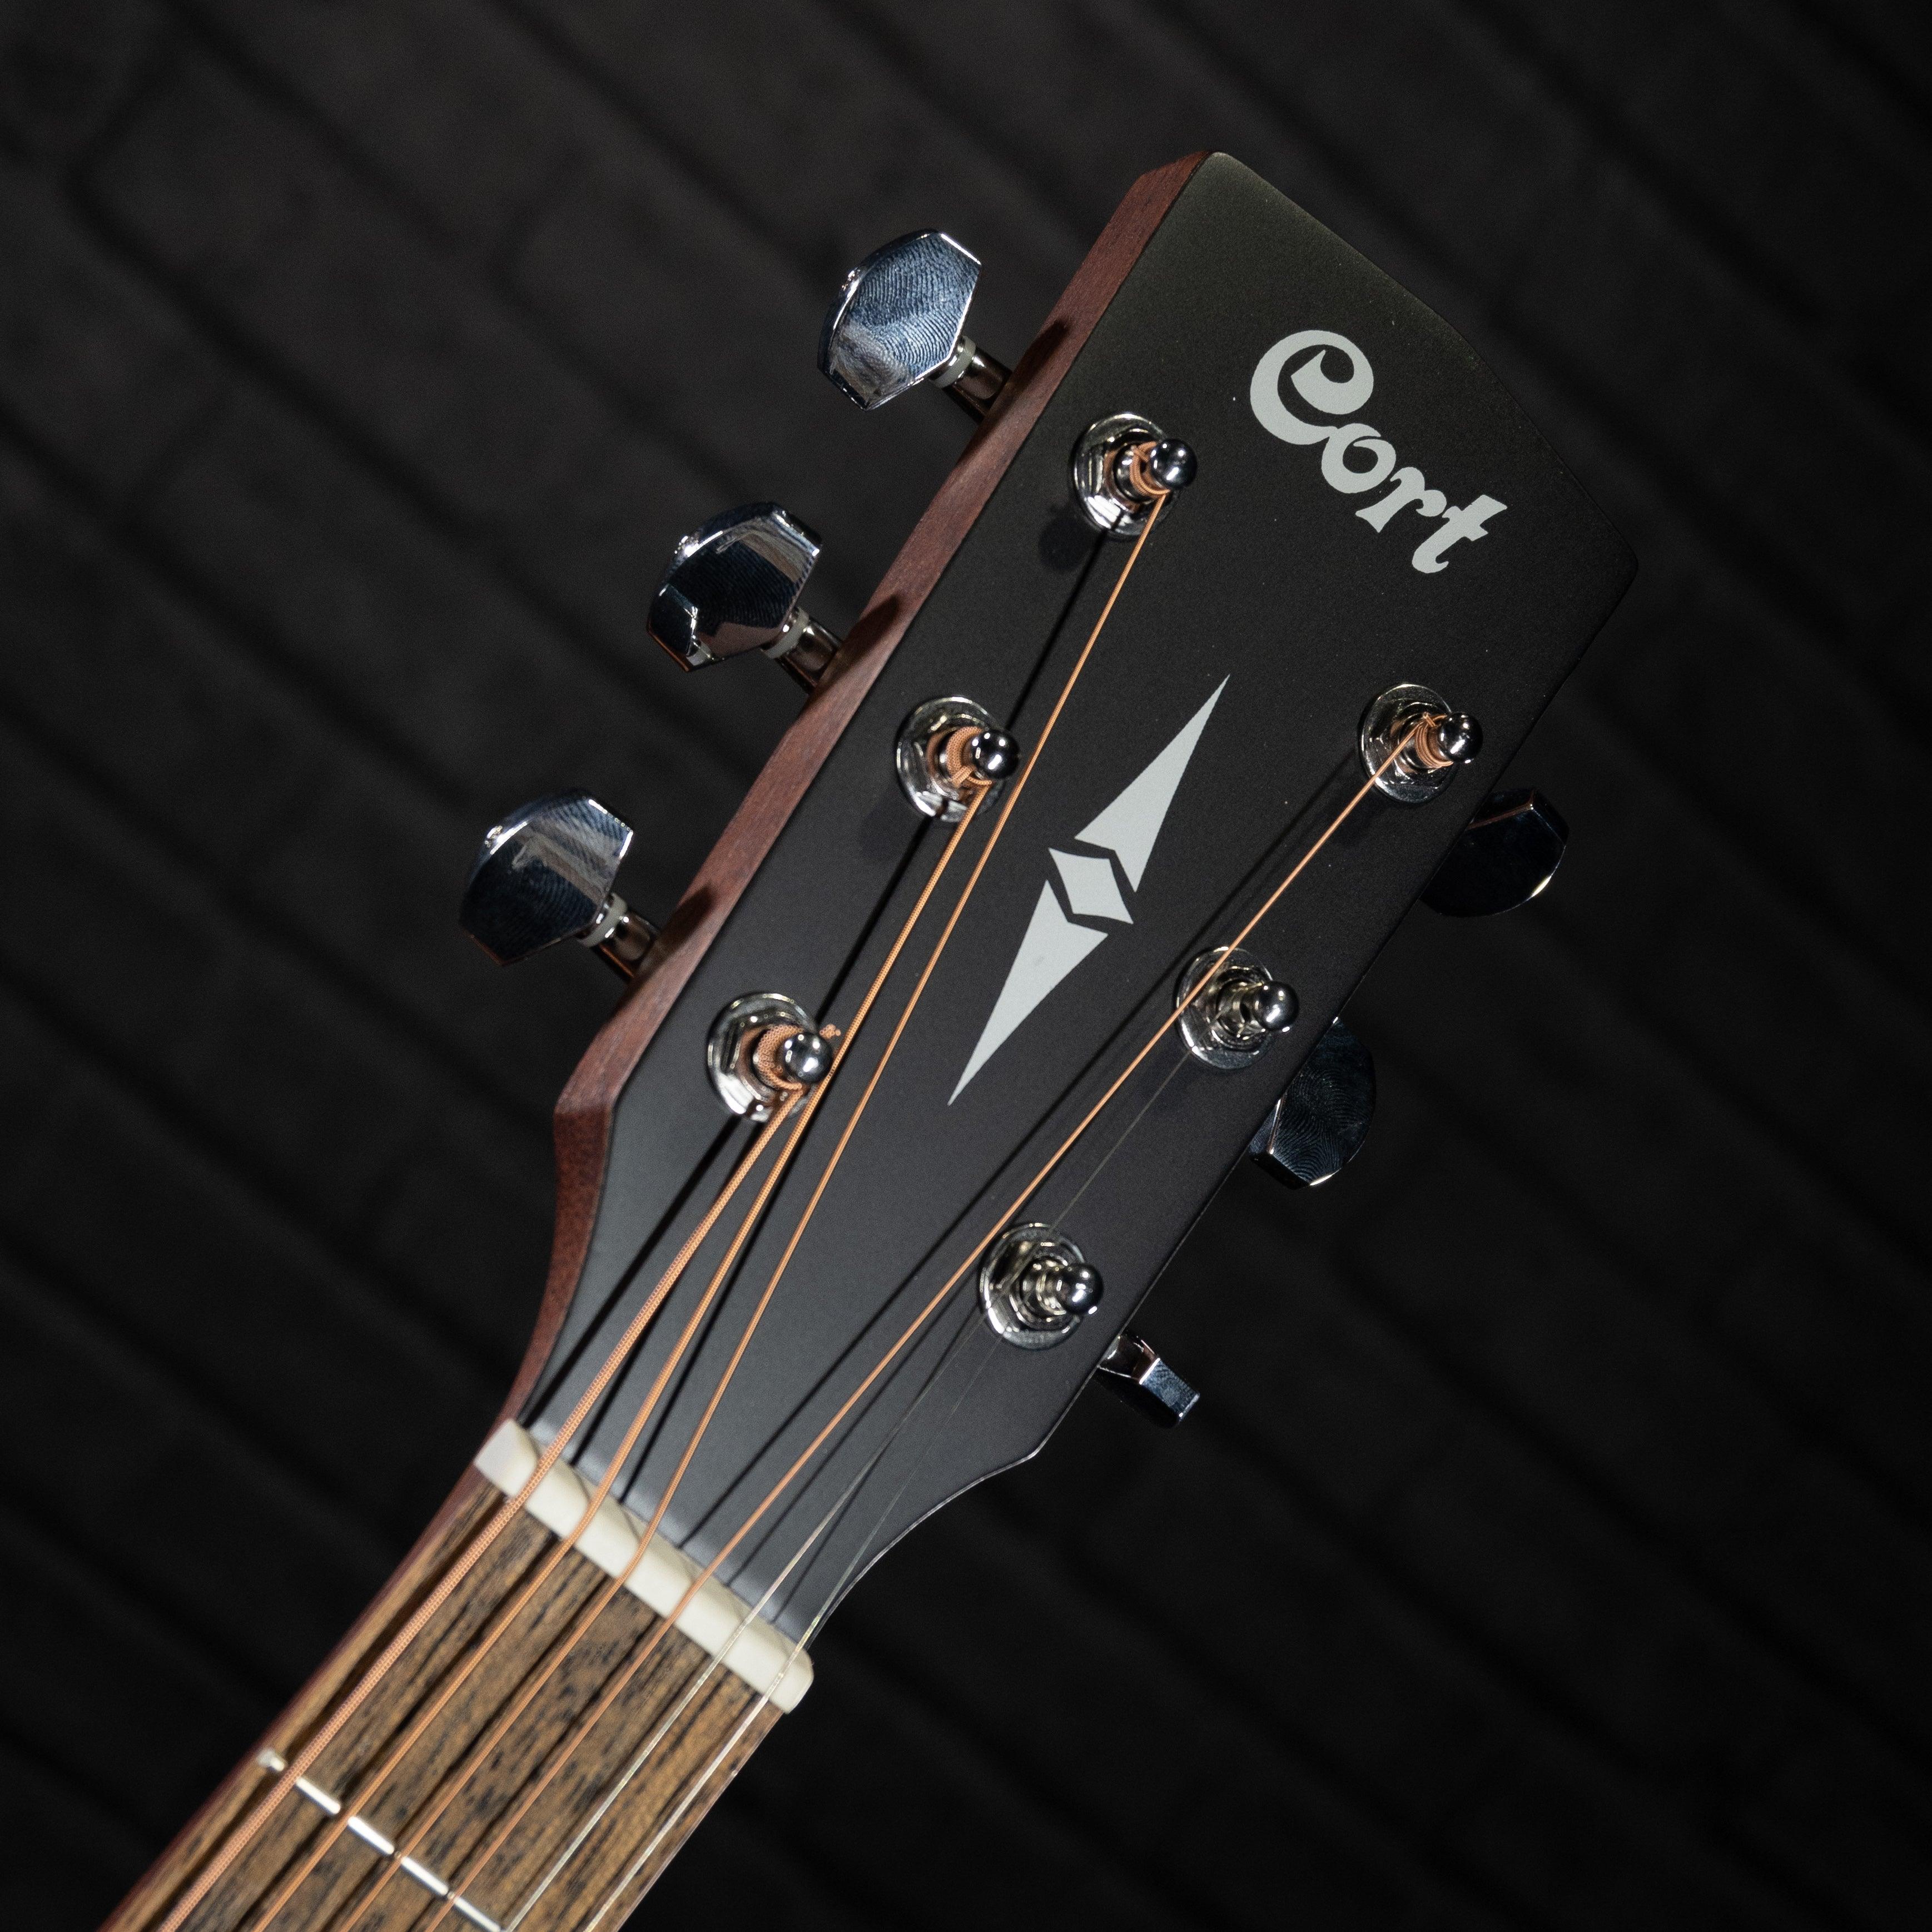 Cort AF515CE Acoustic Electric Guitar - Impulse Music Co.